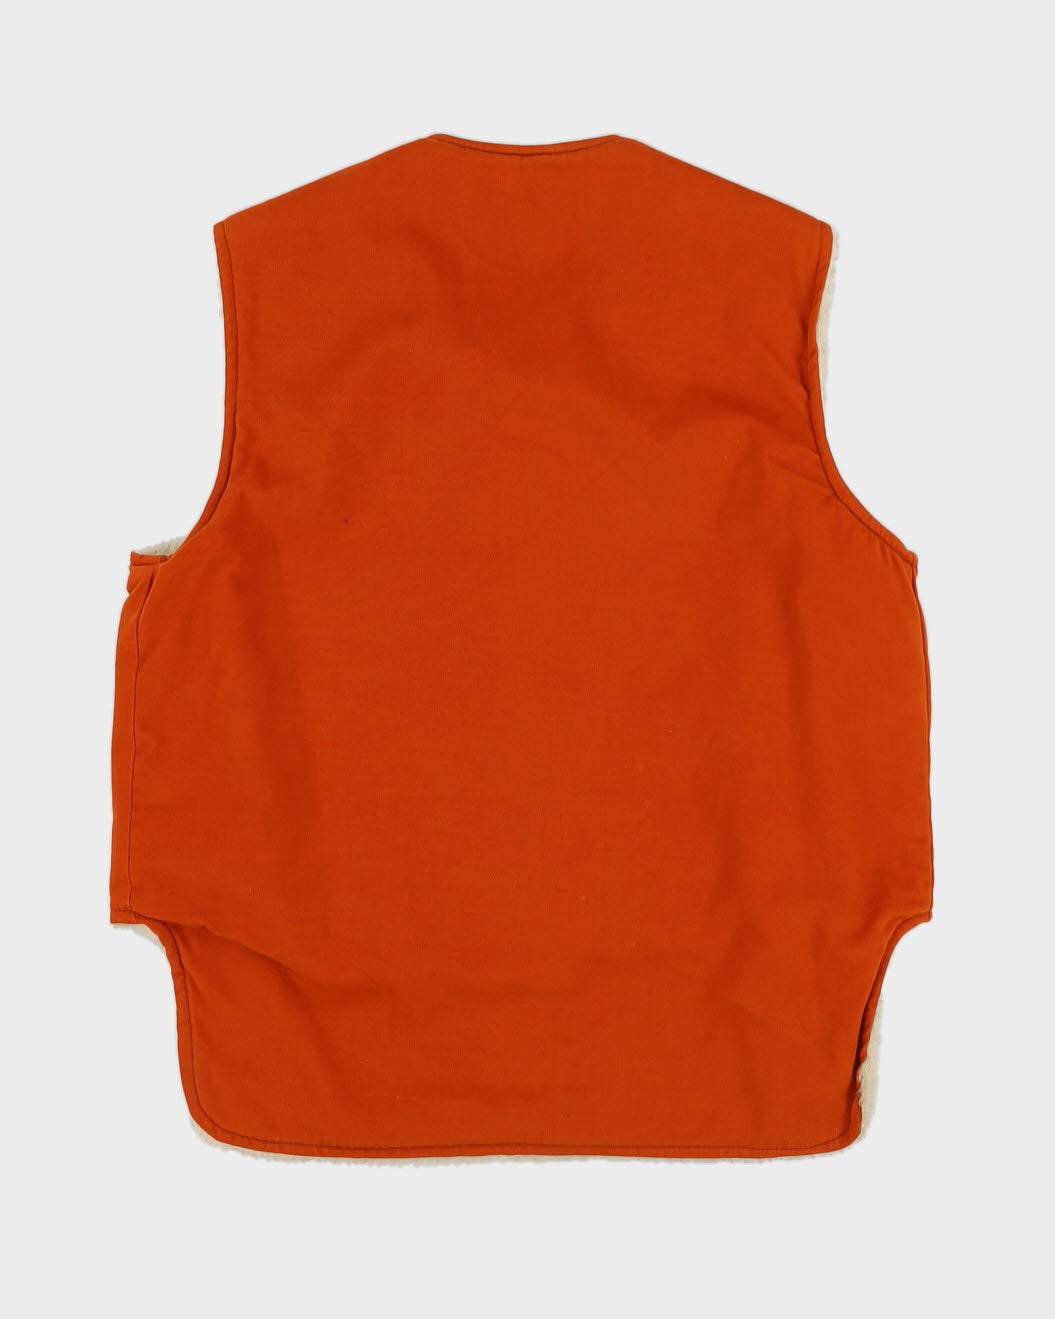 Orange Fleece Lined Gilet - M / L